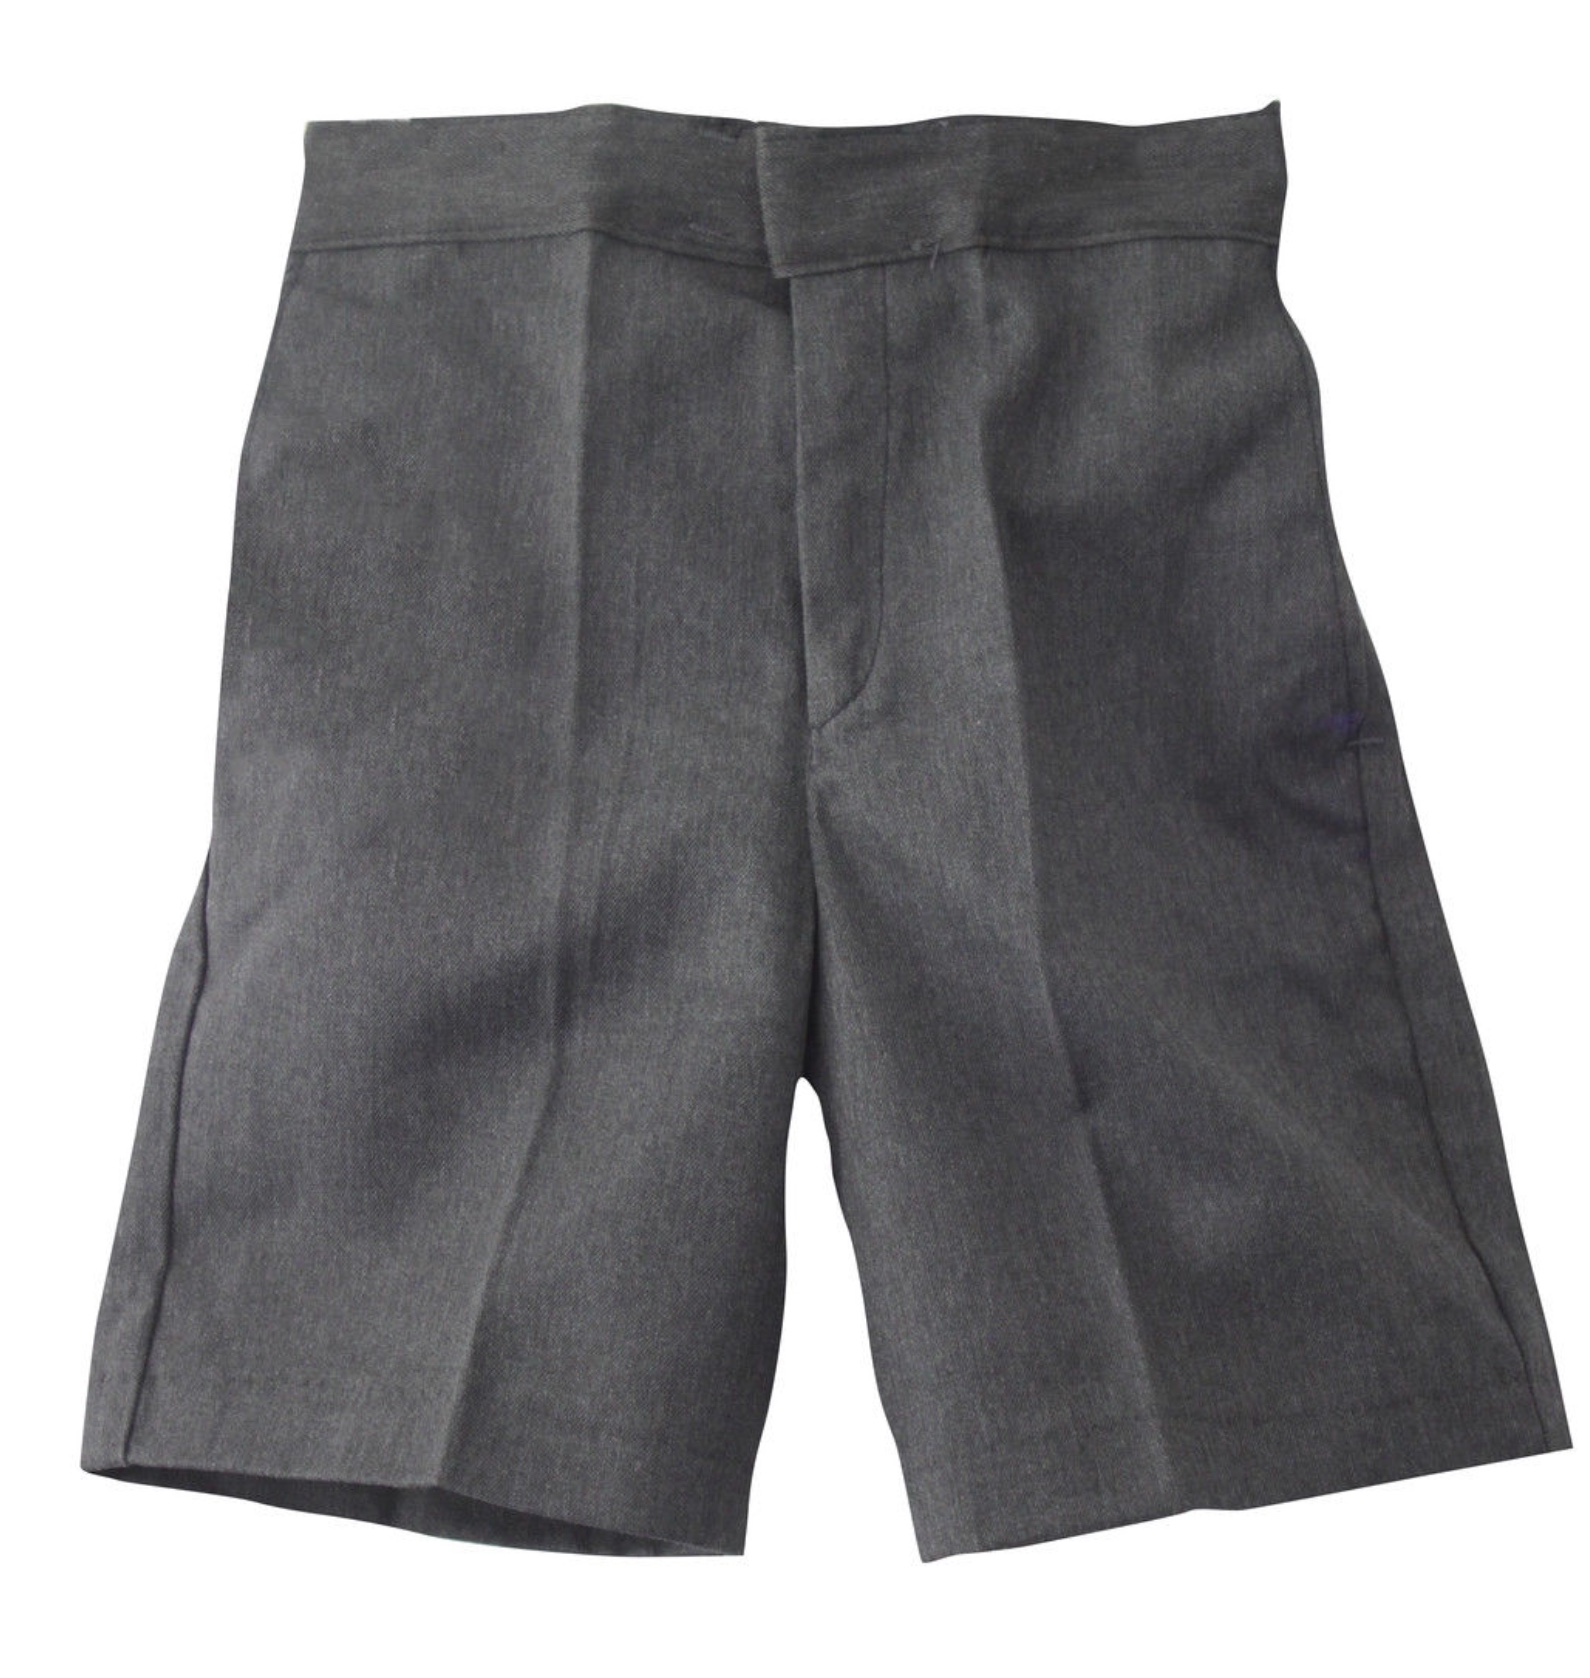 Boys' Dark Grey Shorts, Flat Front, Adjustable Waist, Zip fly, Side and Back Pockets 2-3 Y